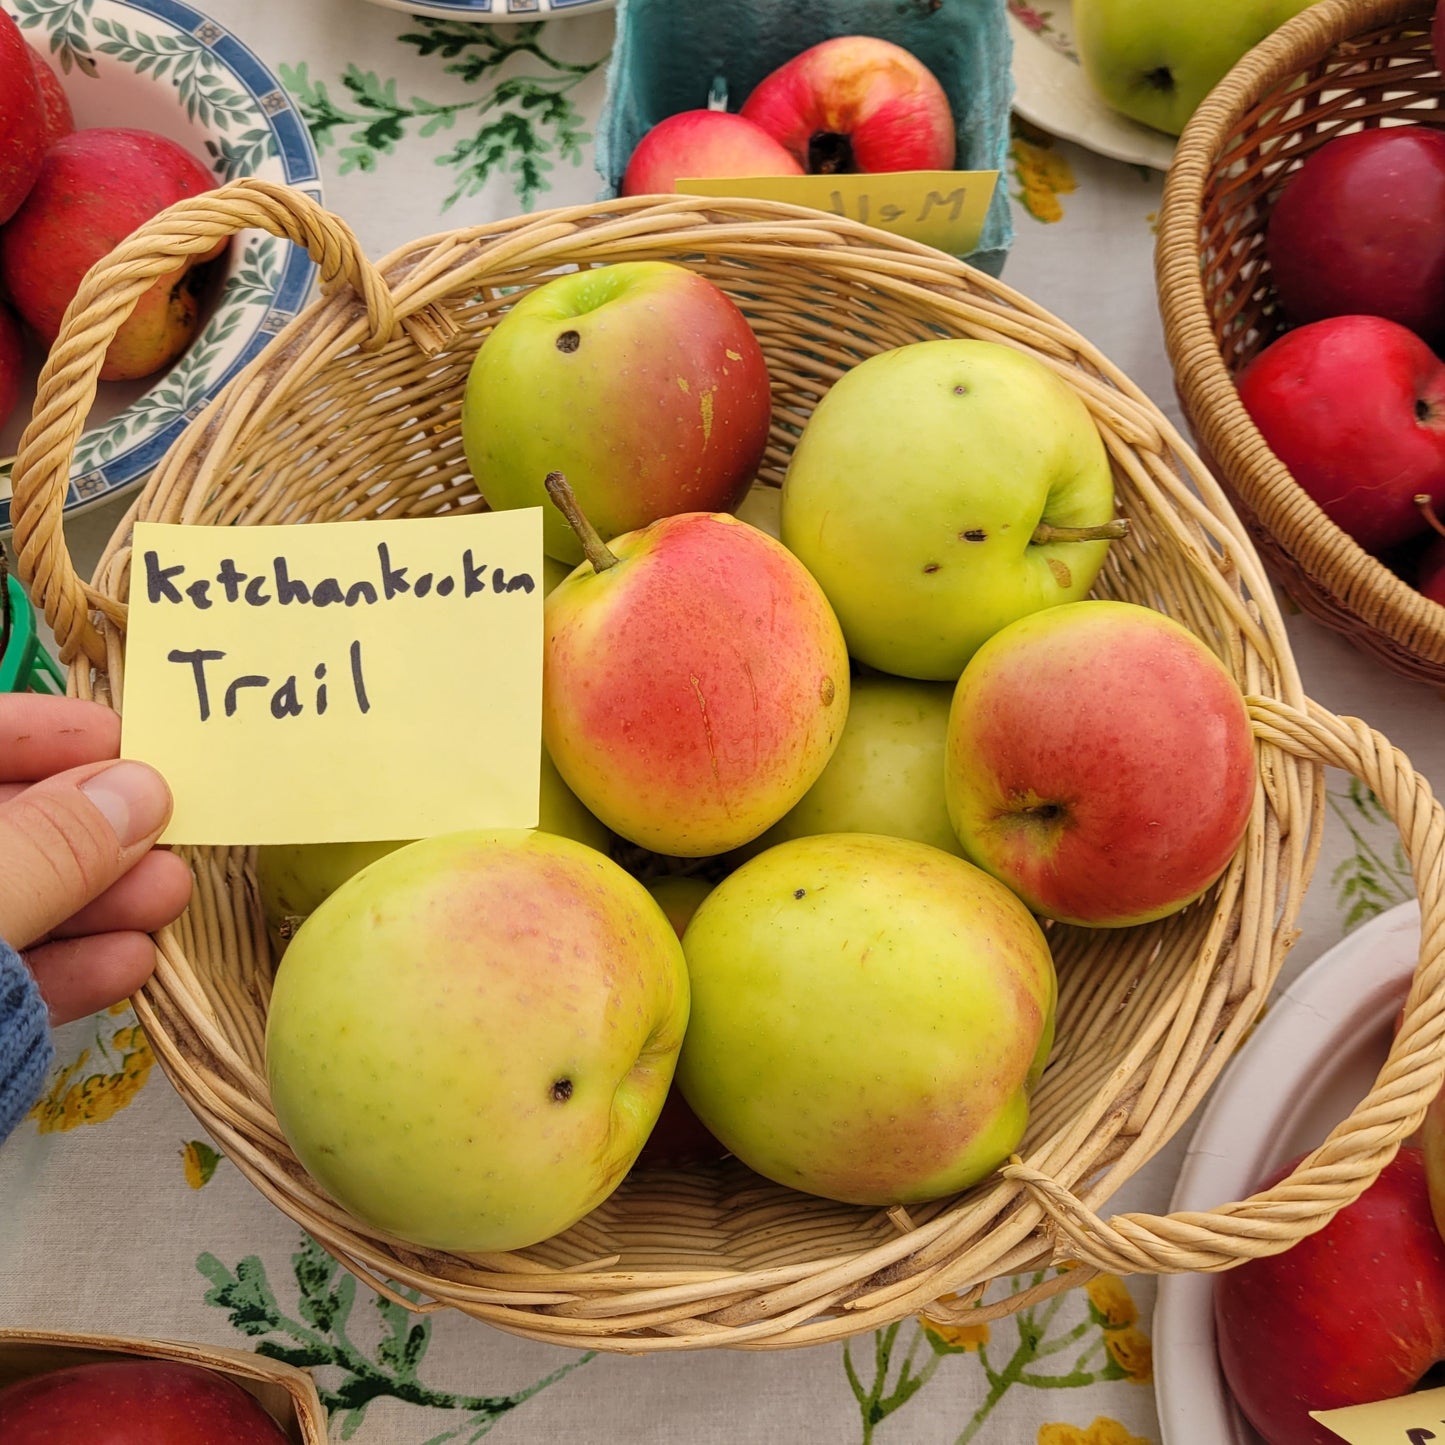 Ketchankookem Trail Apple